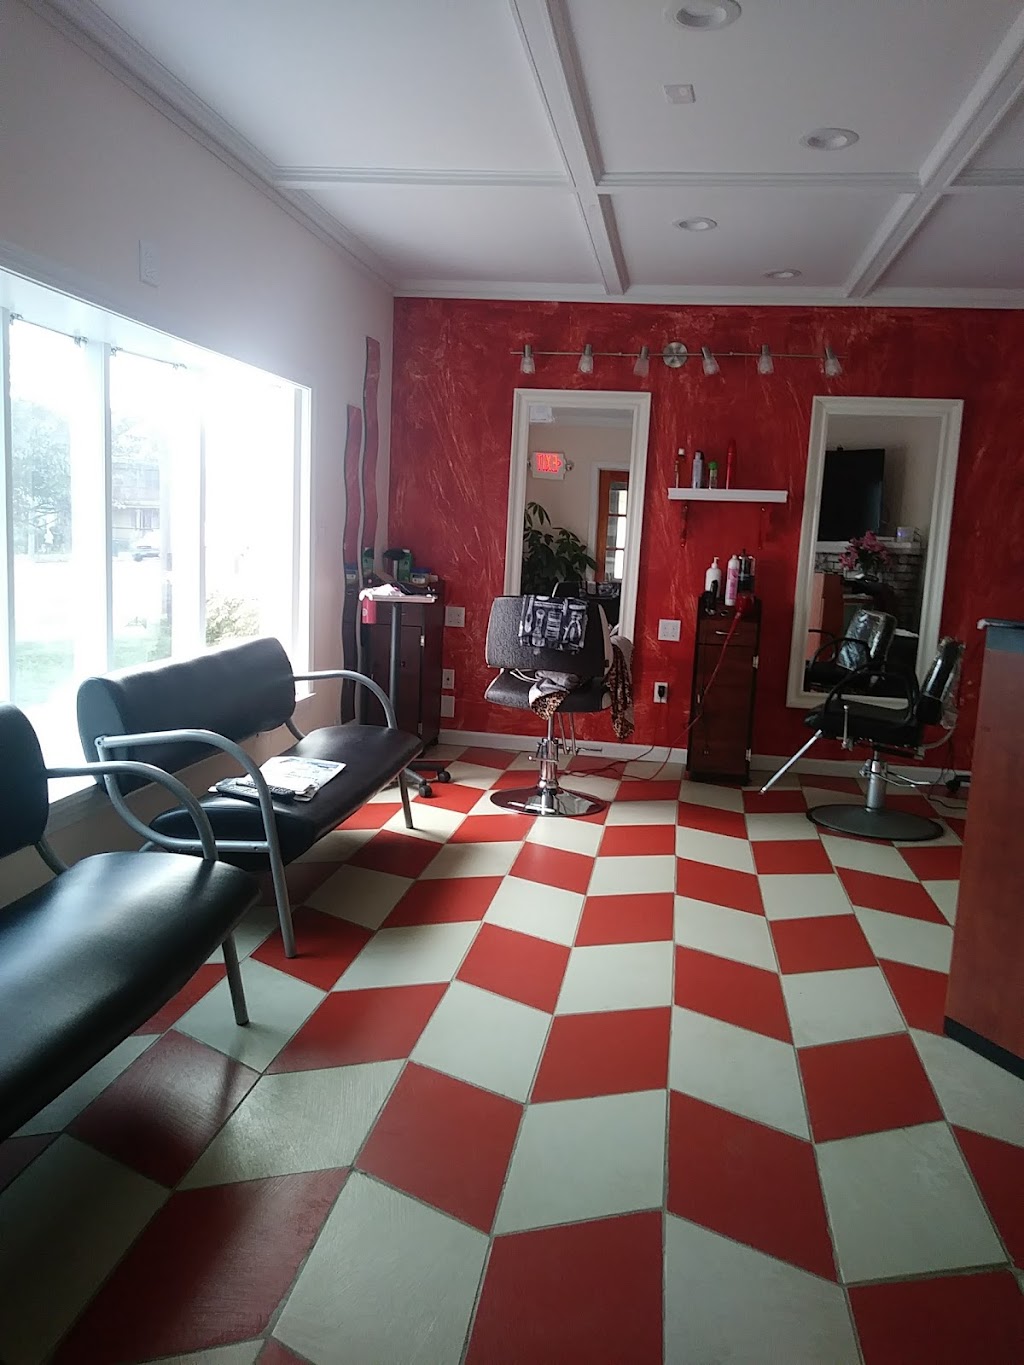 Dignas Hair Salon | 1788 Dixwell Ave, Hamden, CT 06514 | Phone: (203) 824-8537